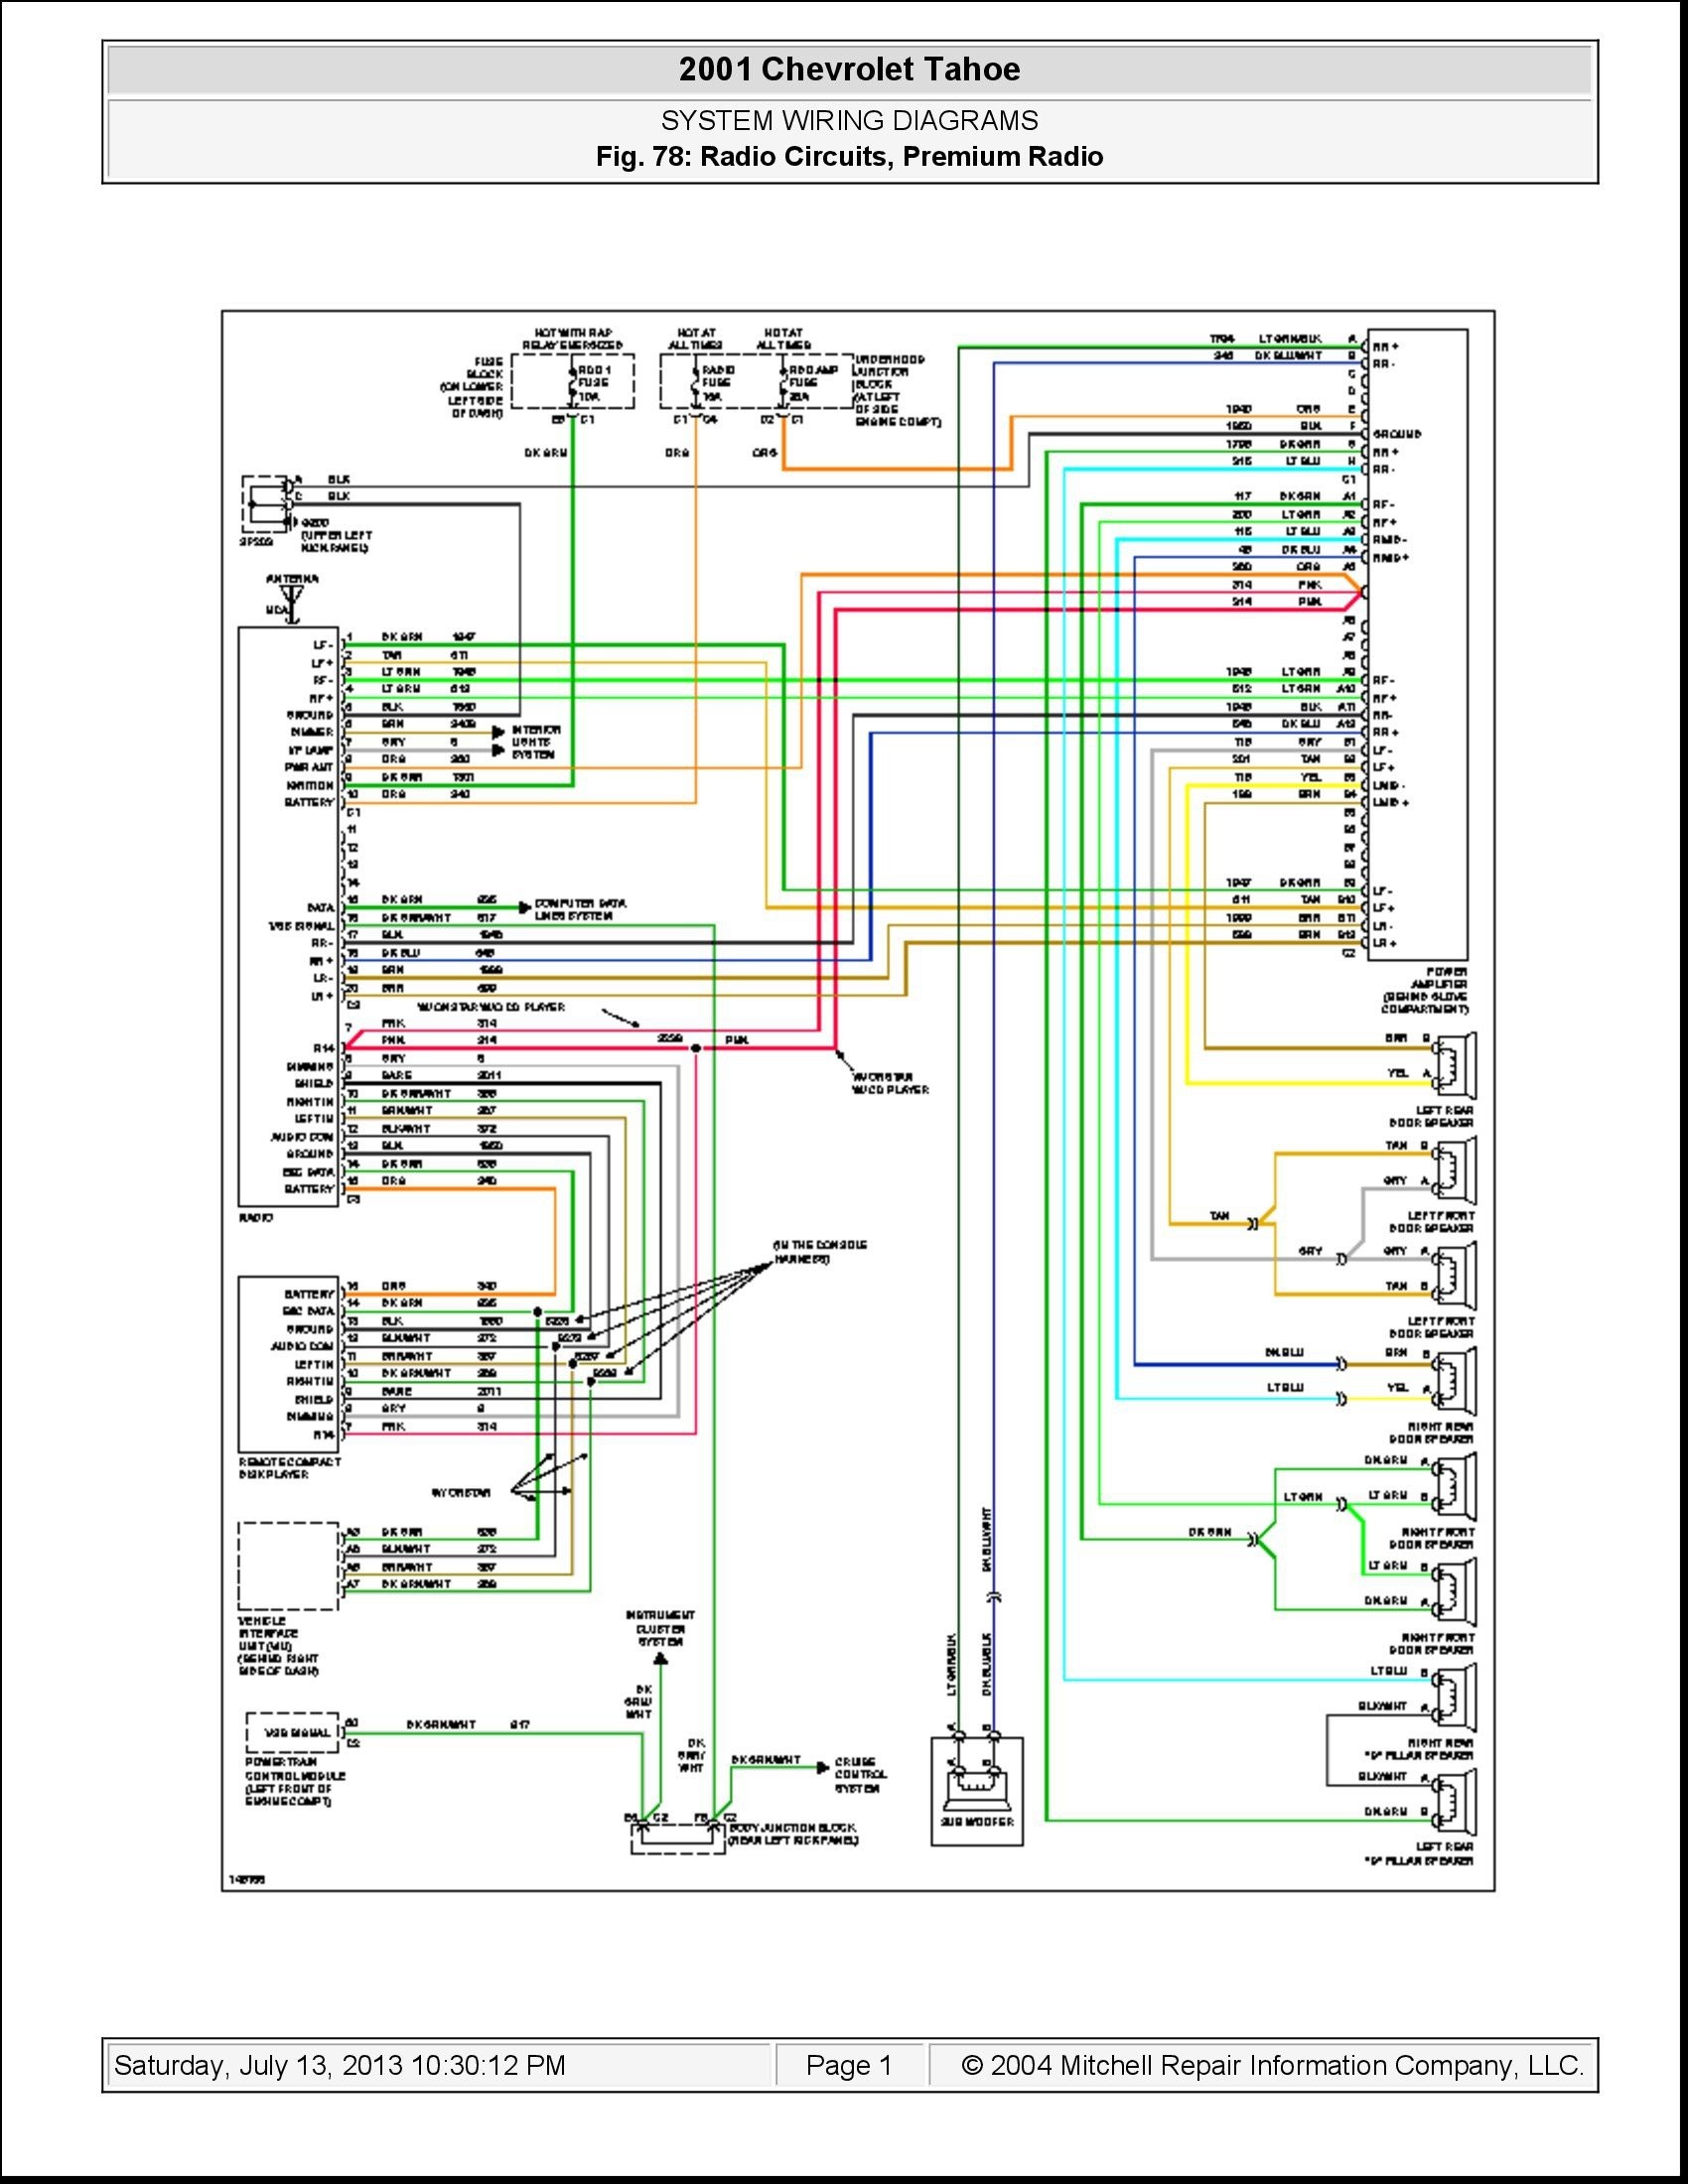 Subaru Engine Diagram Uk Fuse Box Explained Auto Electrical Wiring Diagram Of Subaru Engine Diagram